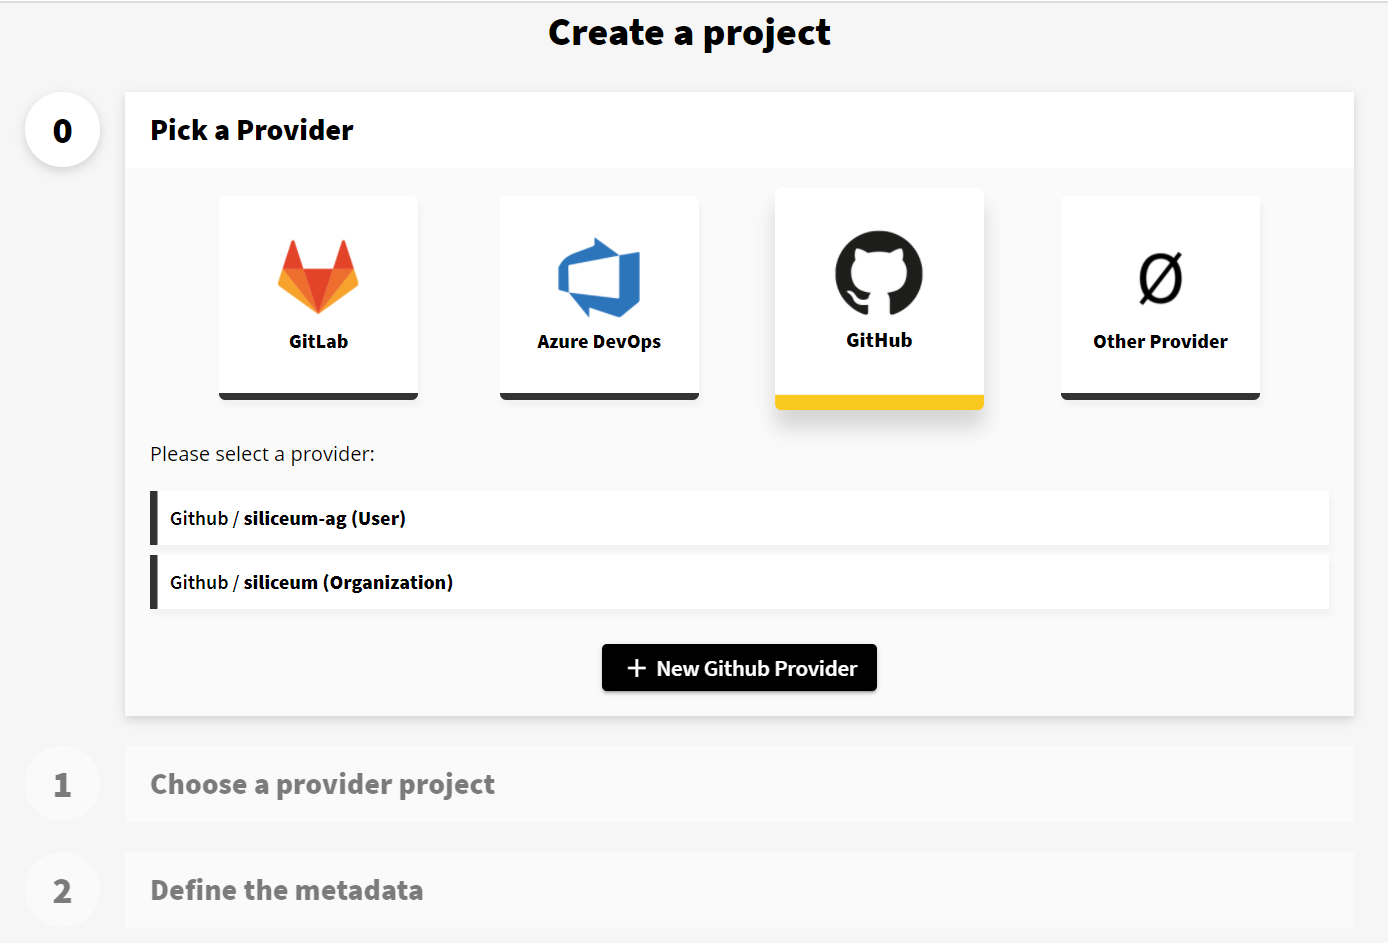 "UX: ergonomie de la page 'Create a project'"